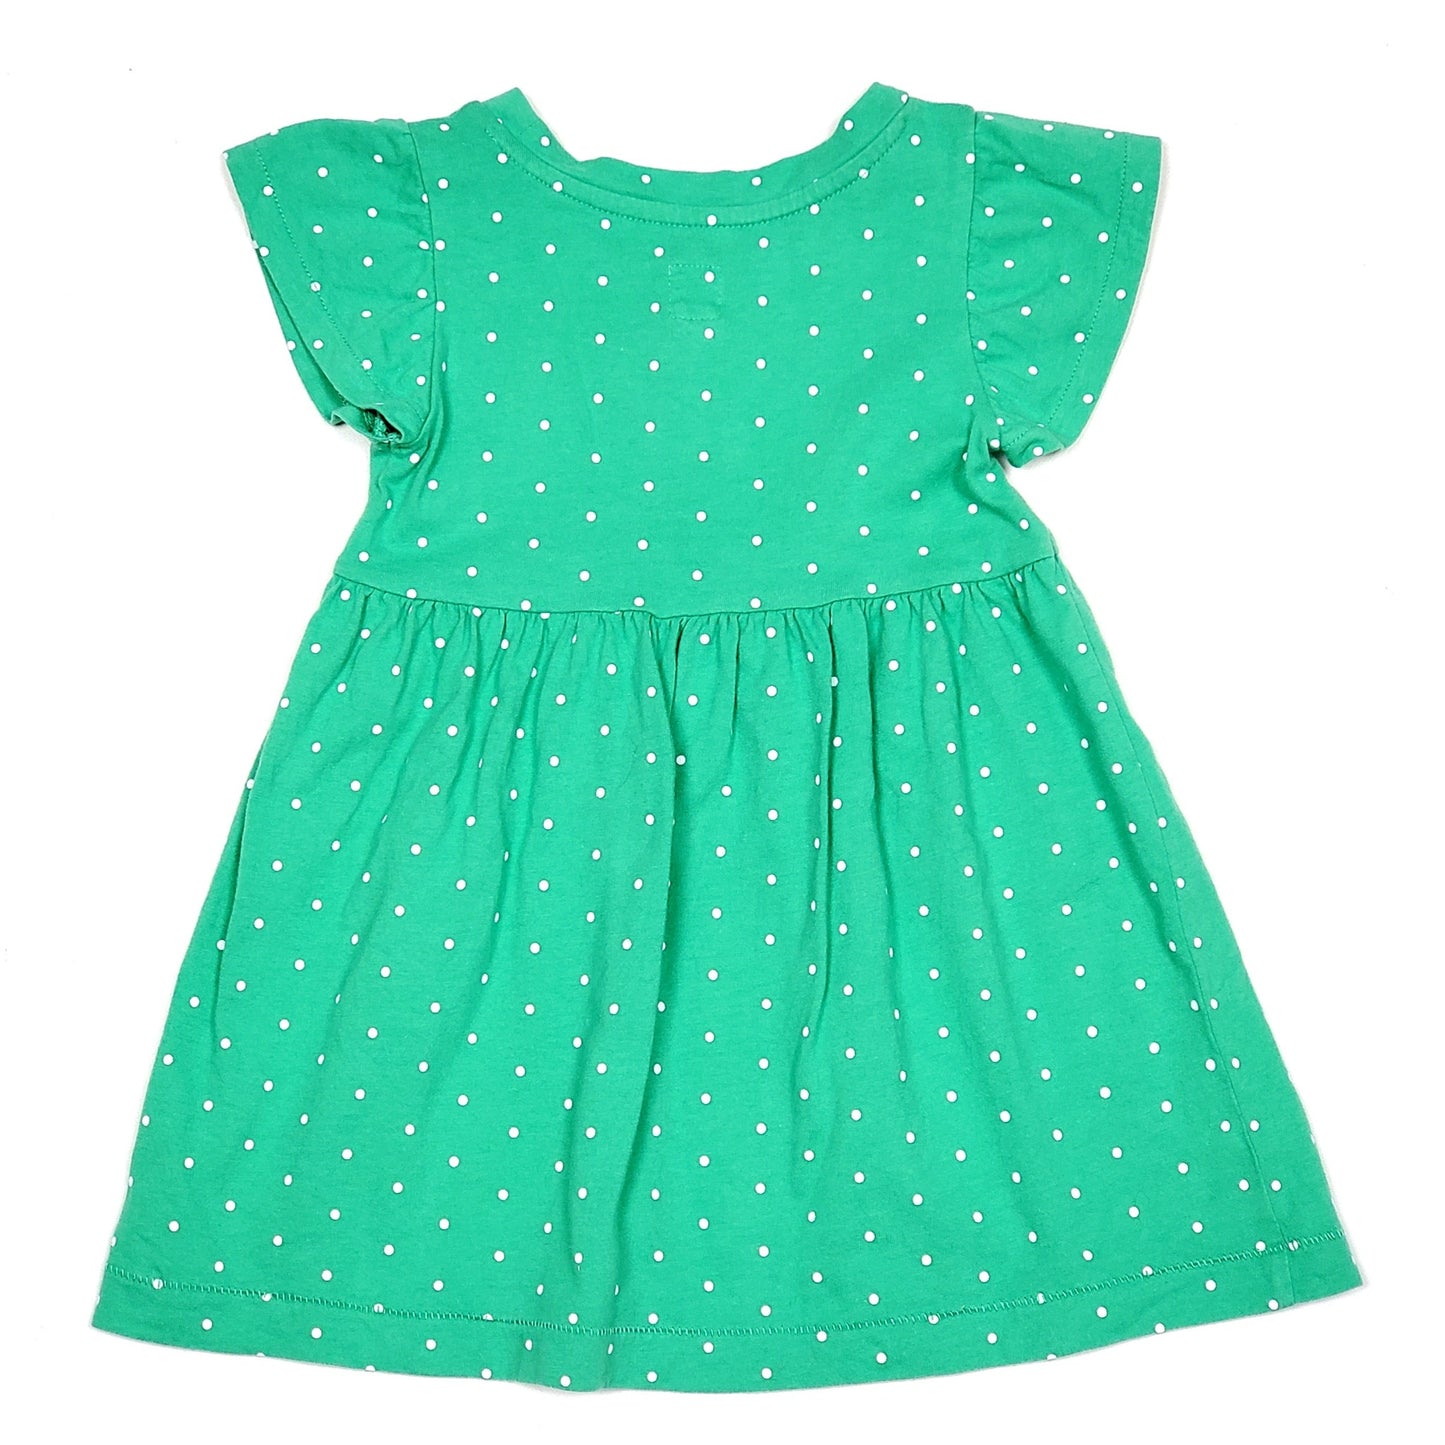 Baby Gap Girls Green White Polka Dot Dress 2T Used, back